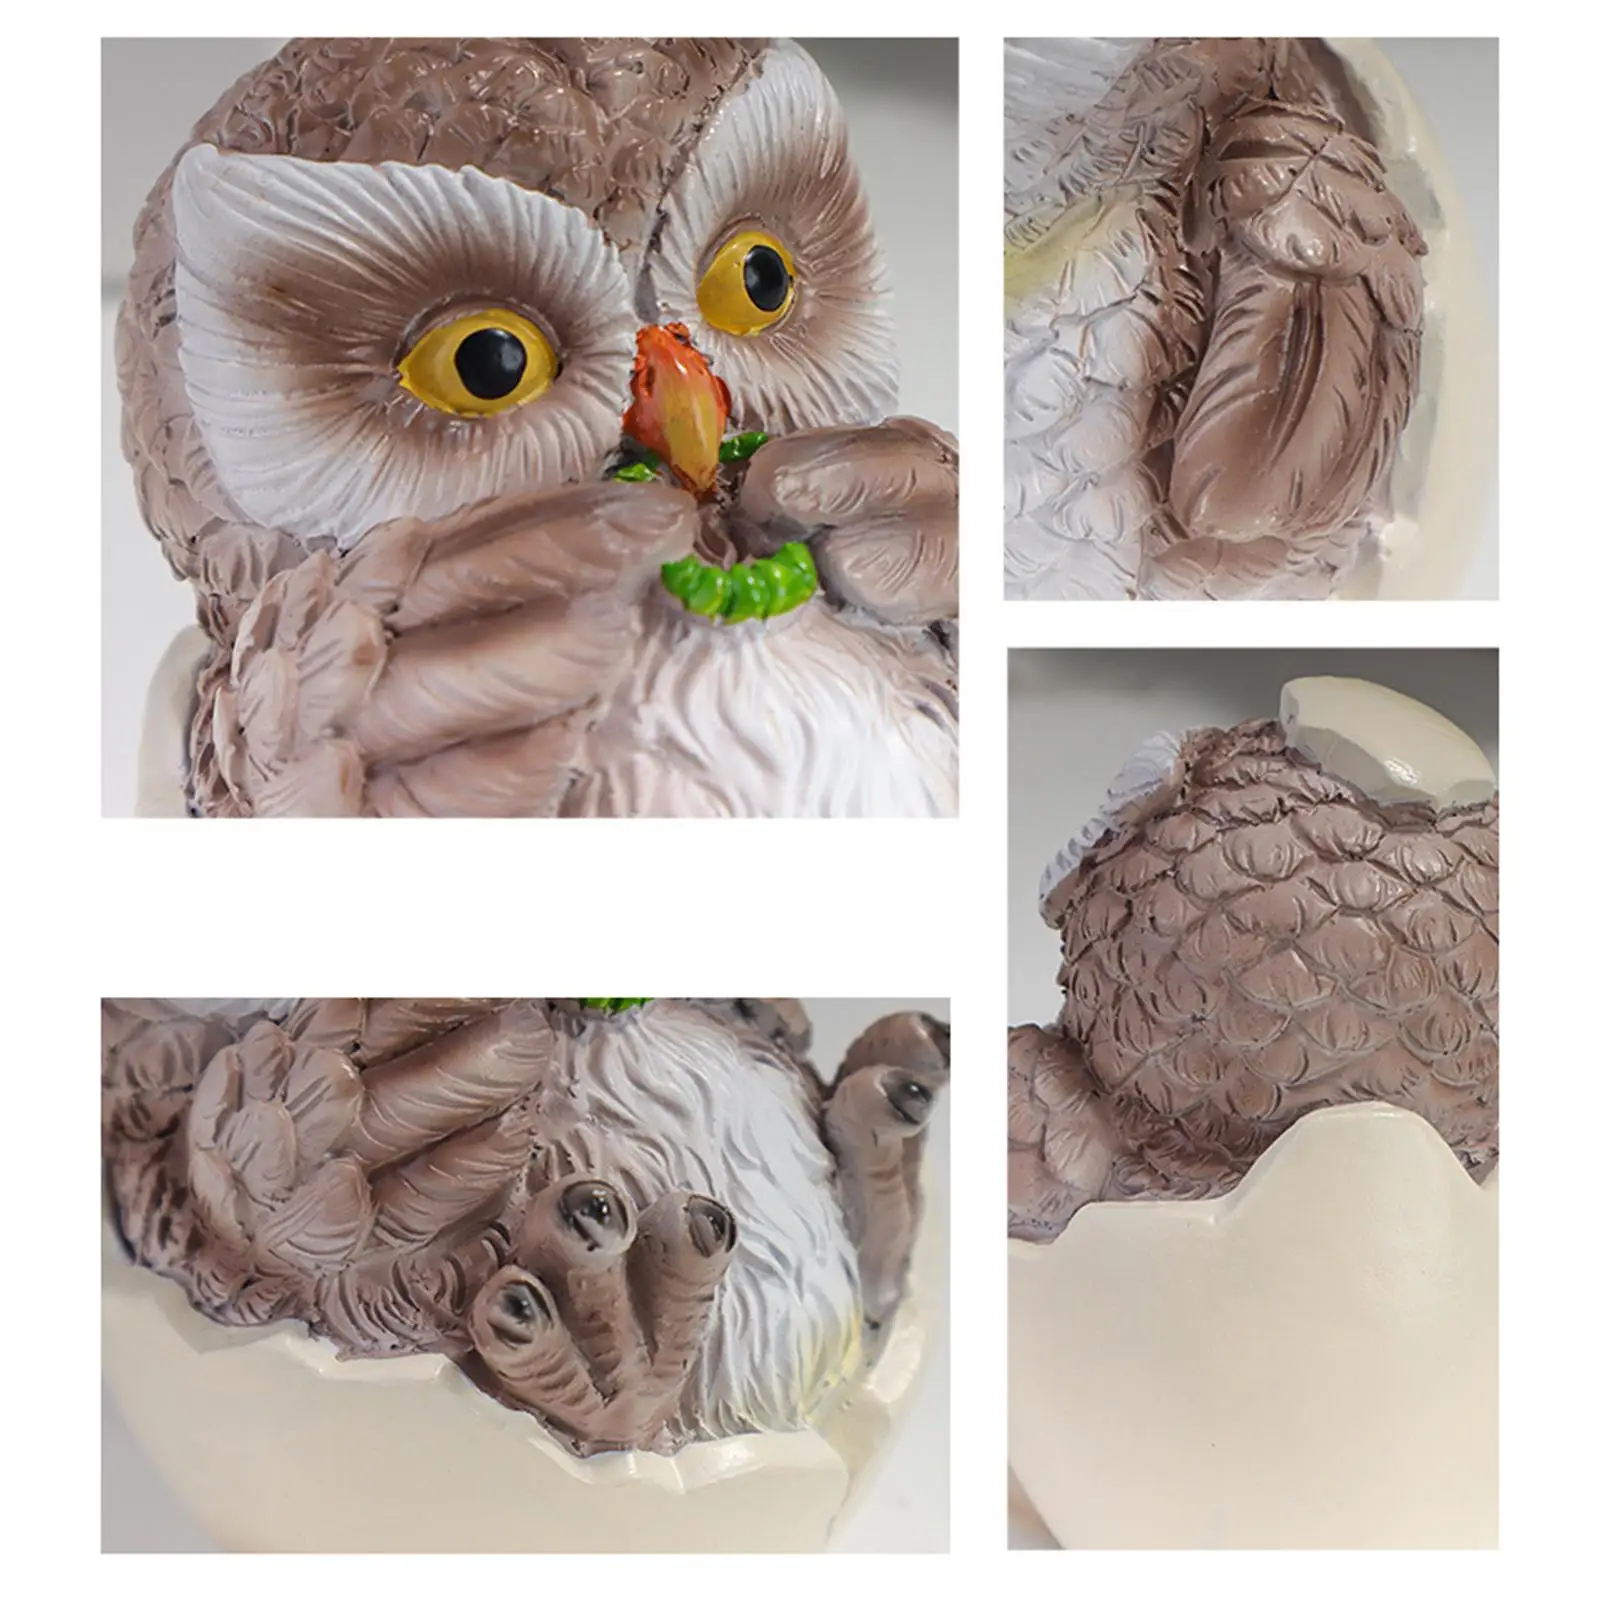 2x Creative Owl Statues Figurines Ornament Resin Gifts Art Works Decoration for Room Balcony Wedding Bookshelf